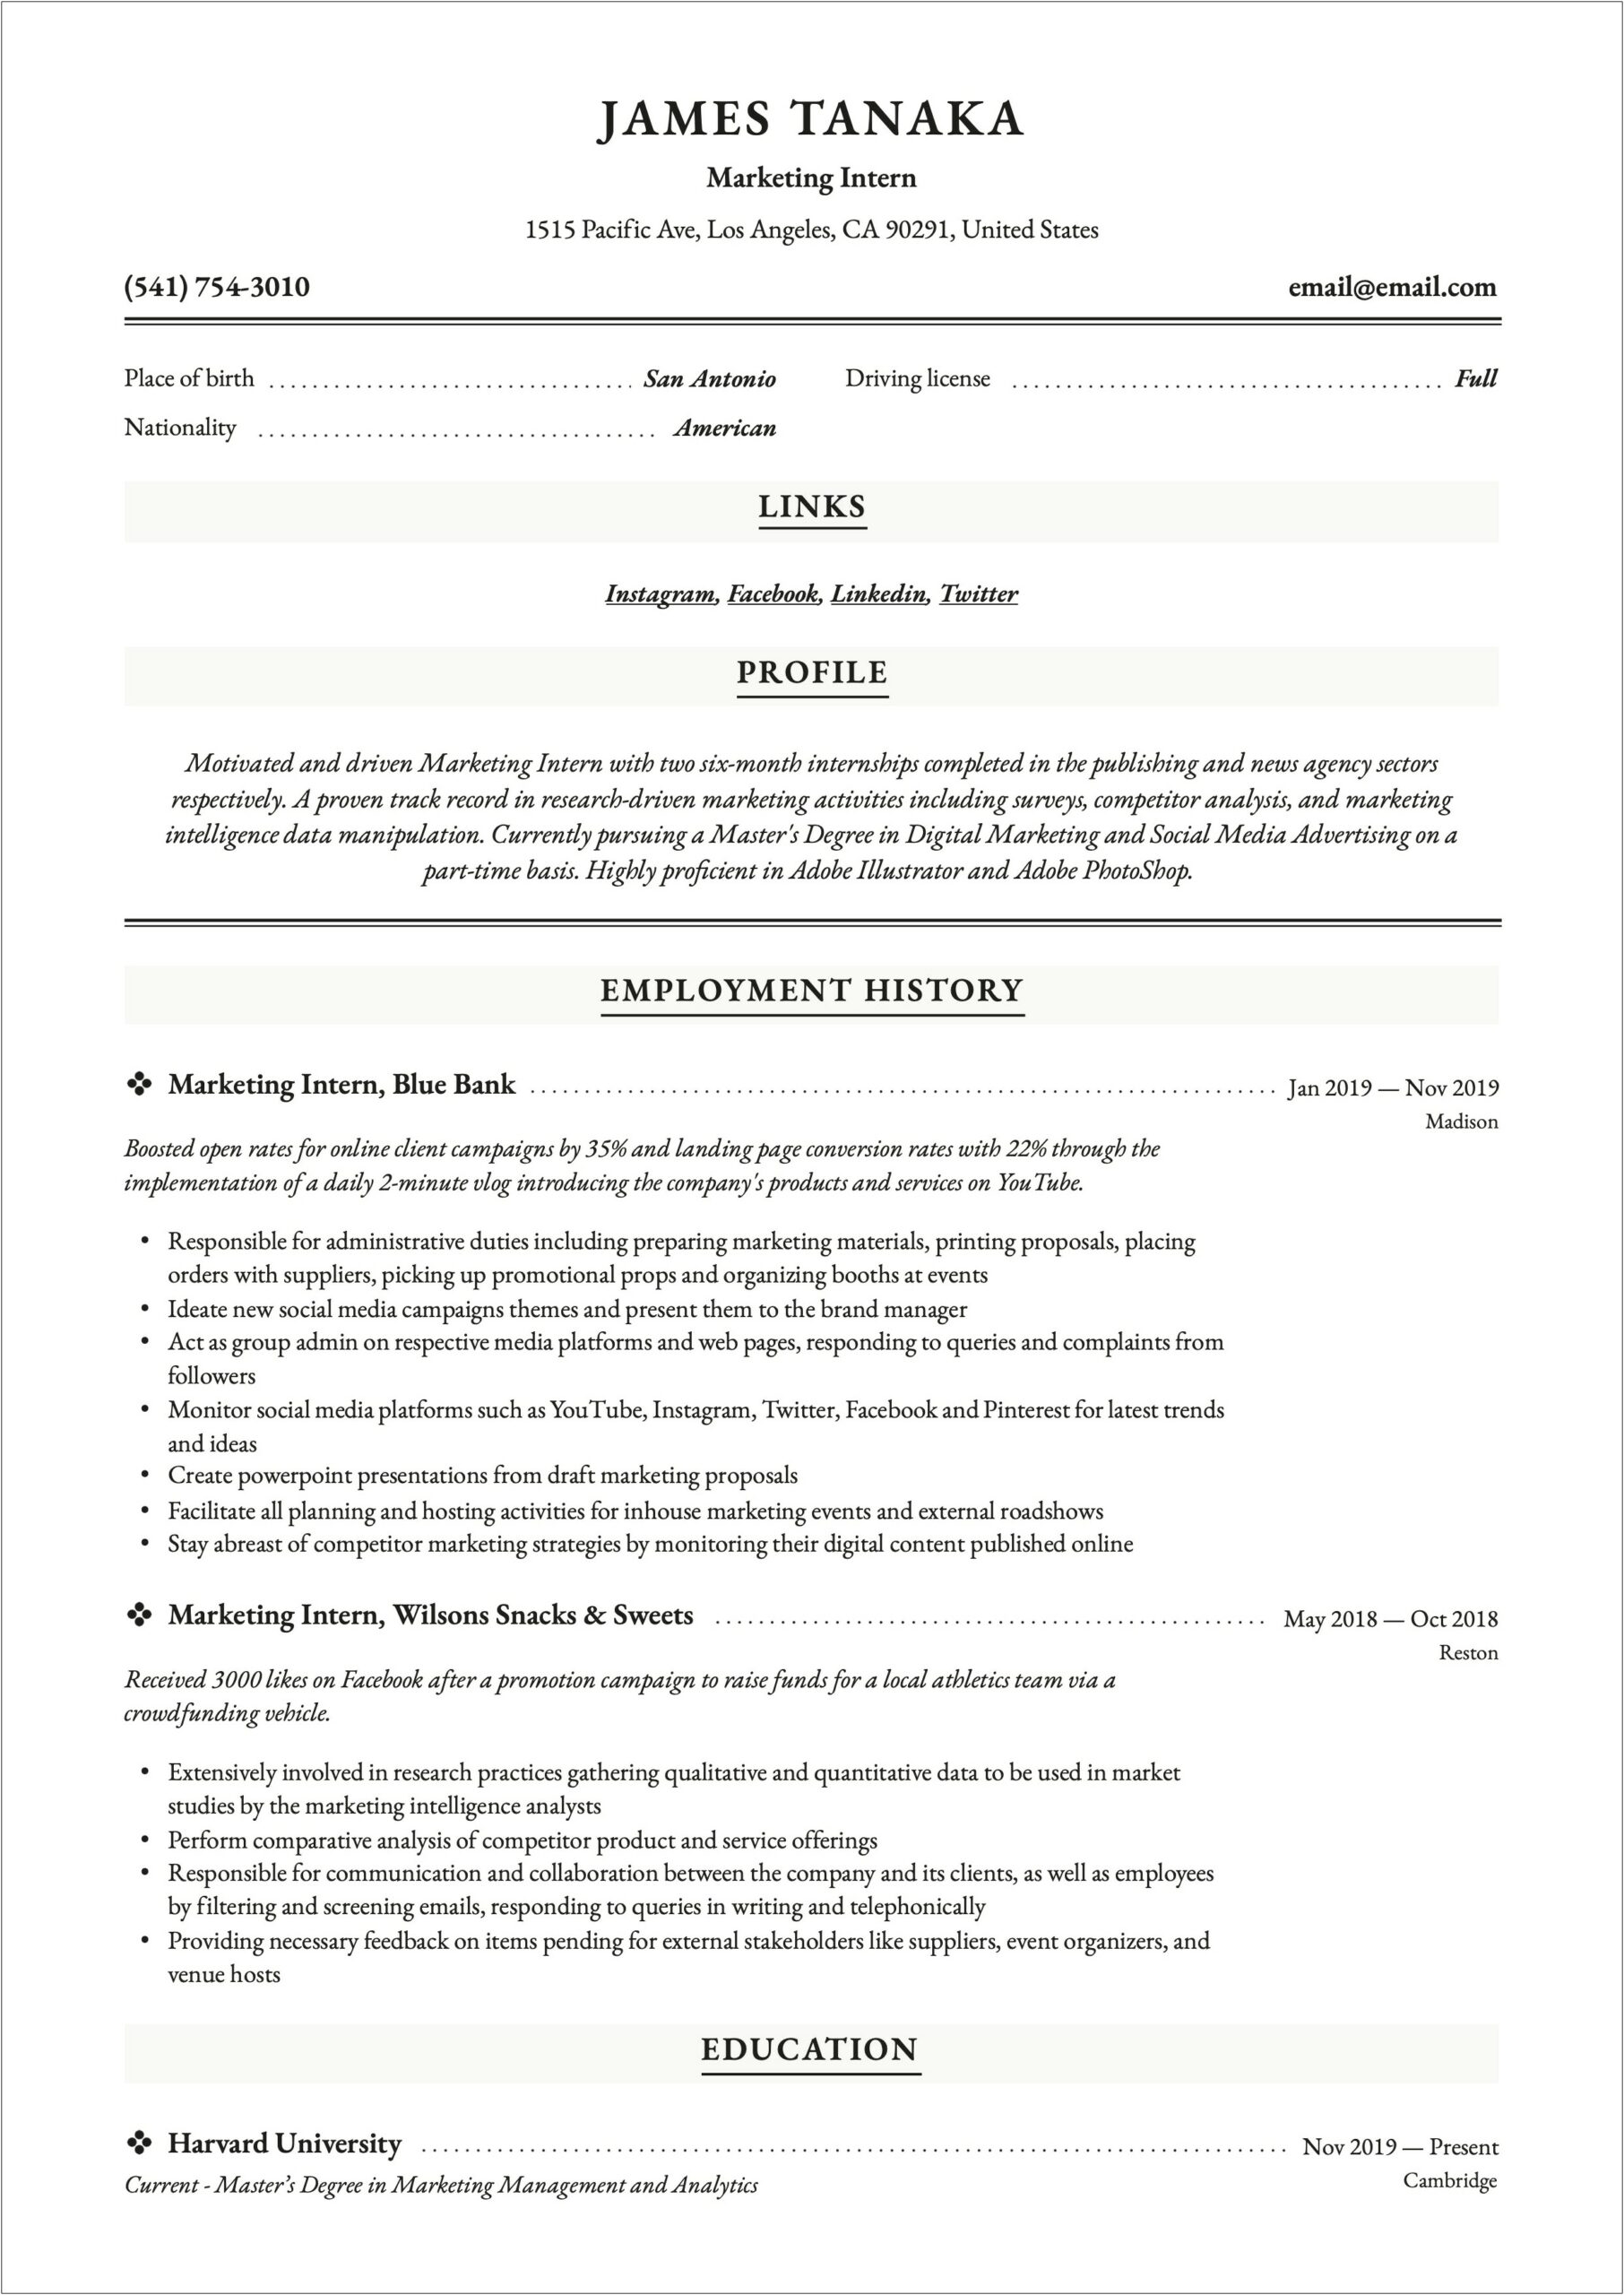 Marketing Intern Job Description Resume